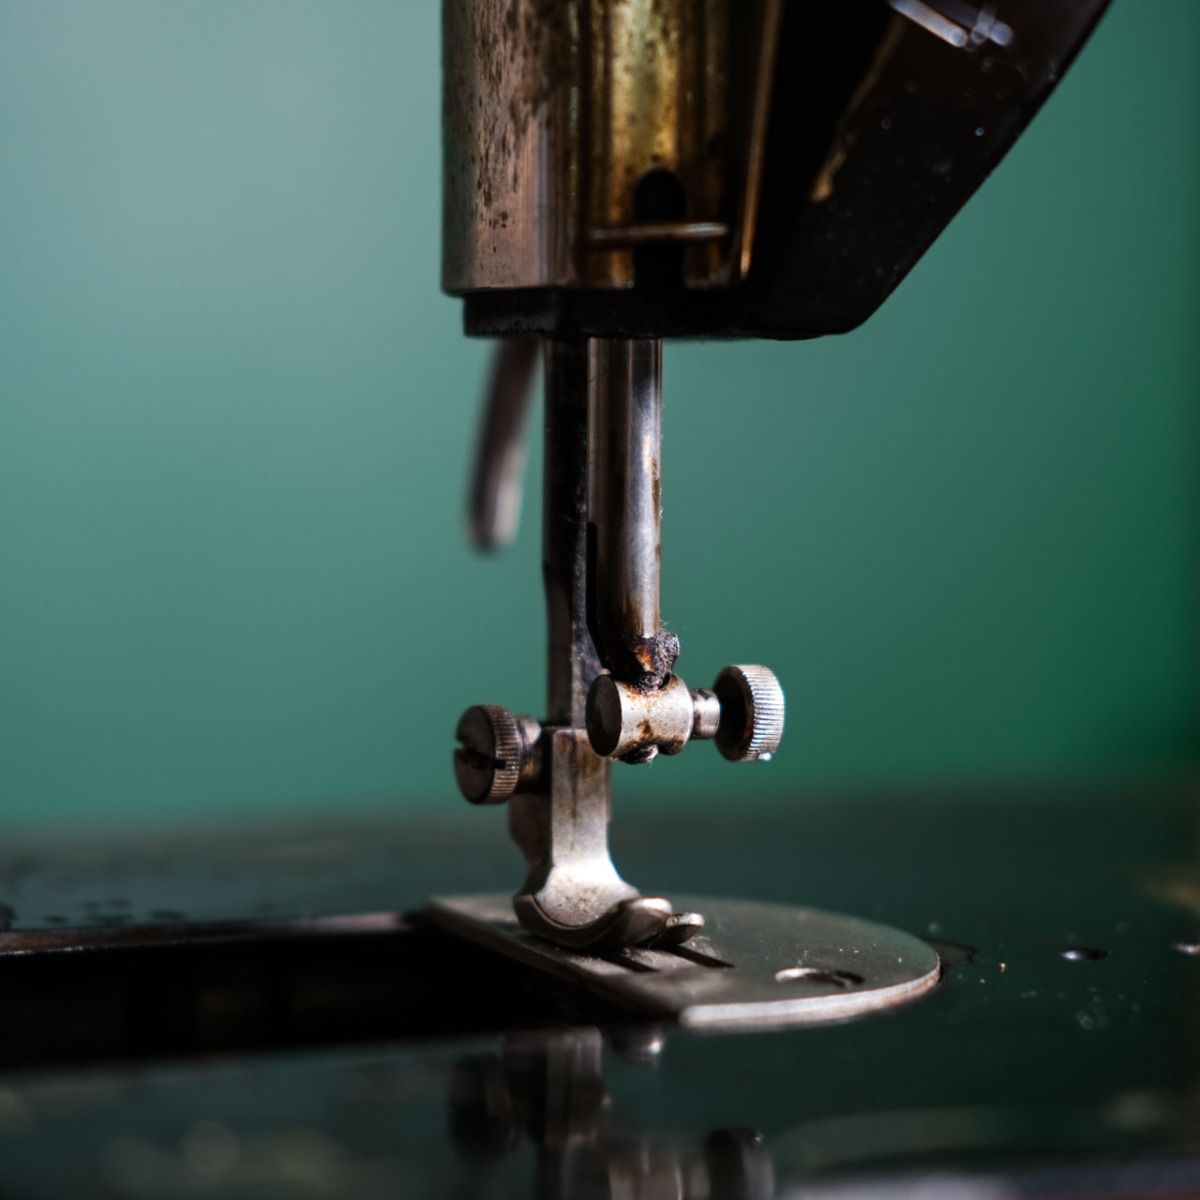 Antique German Köhler sewing machine